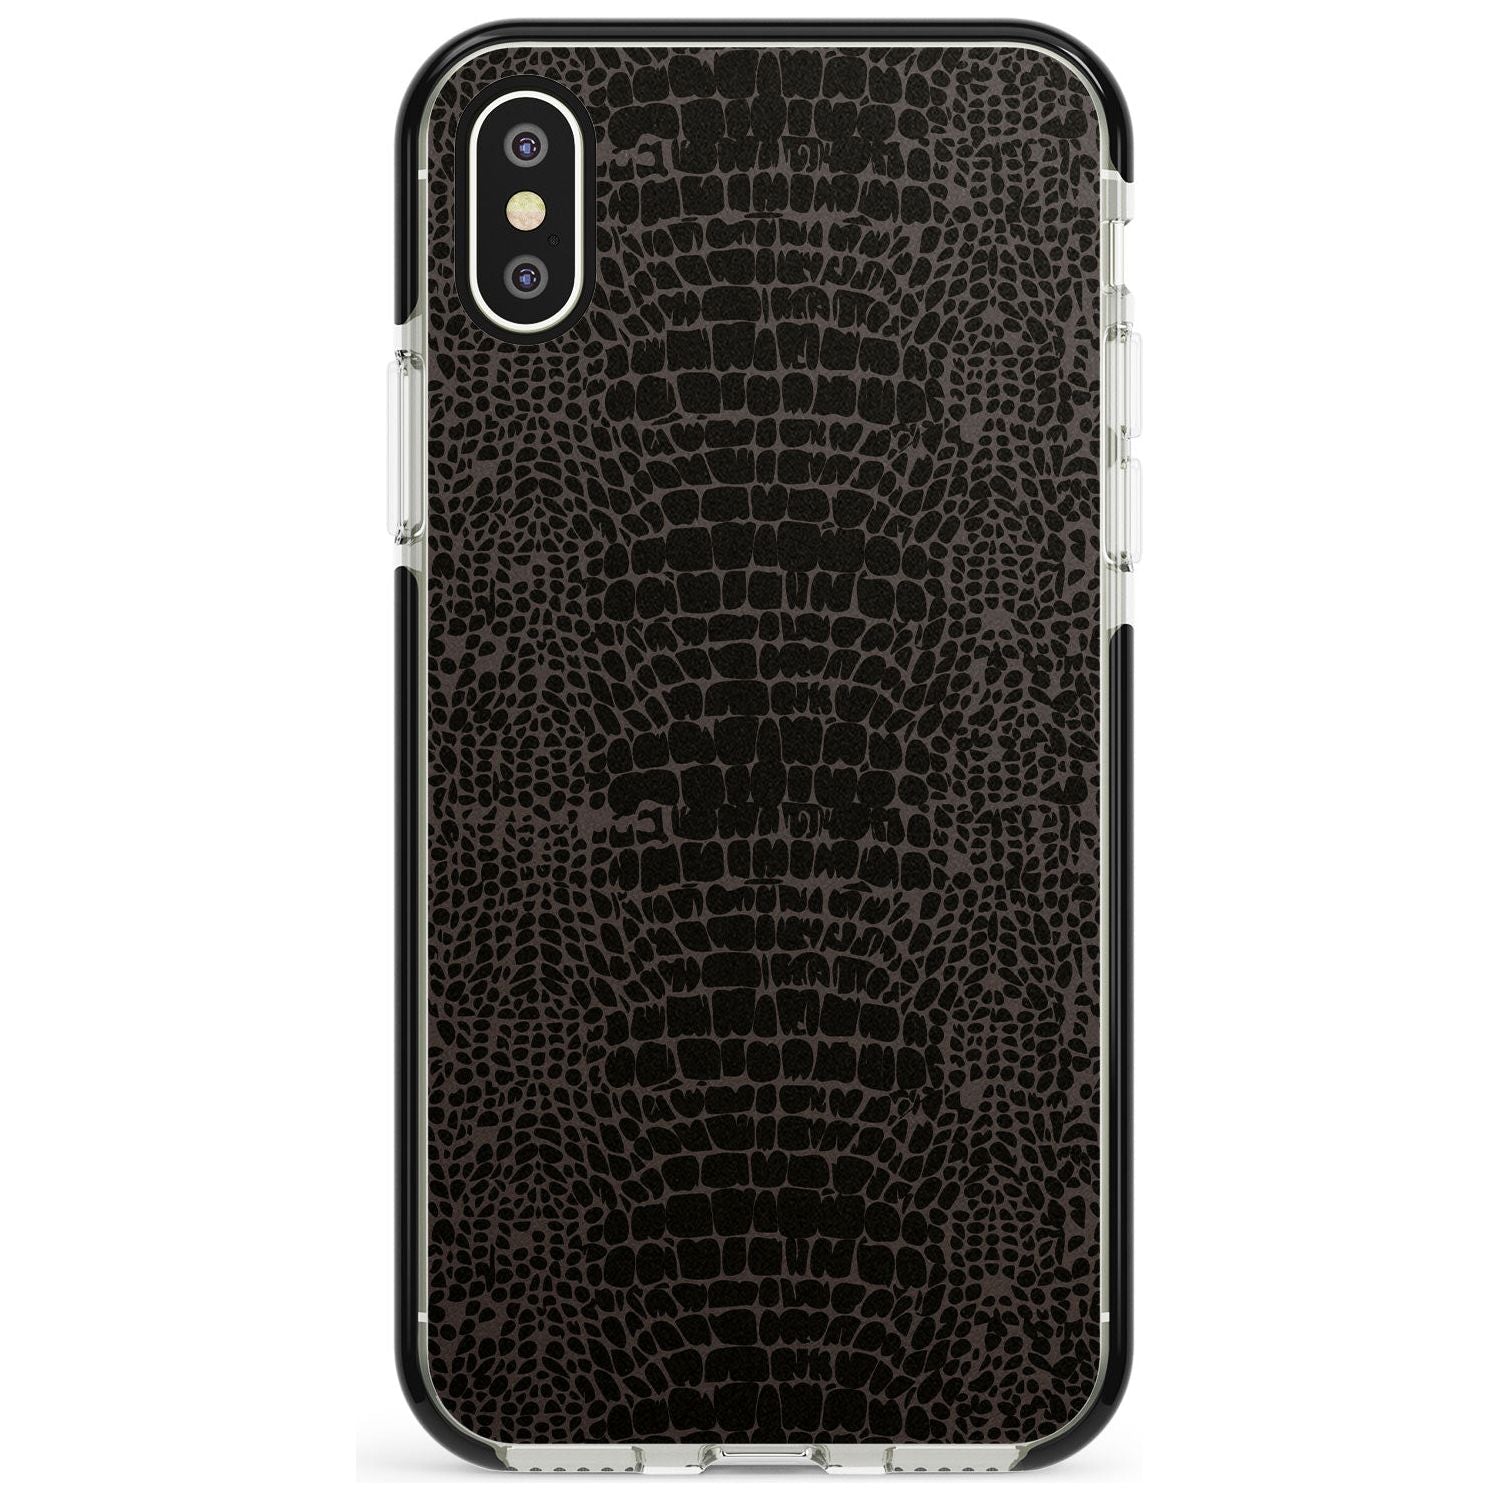 Dark Animal Print Pattern Snake Skin Black Impact Phone Case for iPhone X XS Max XR